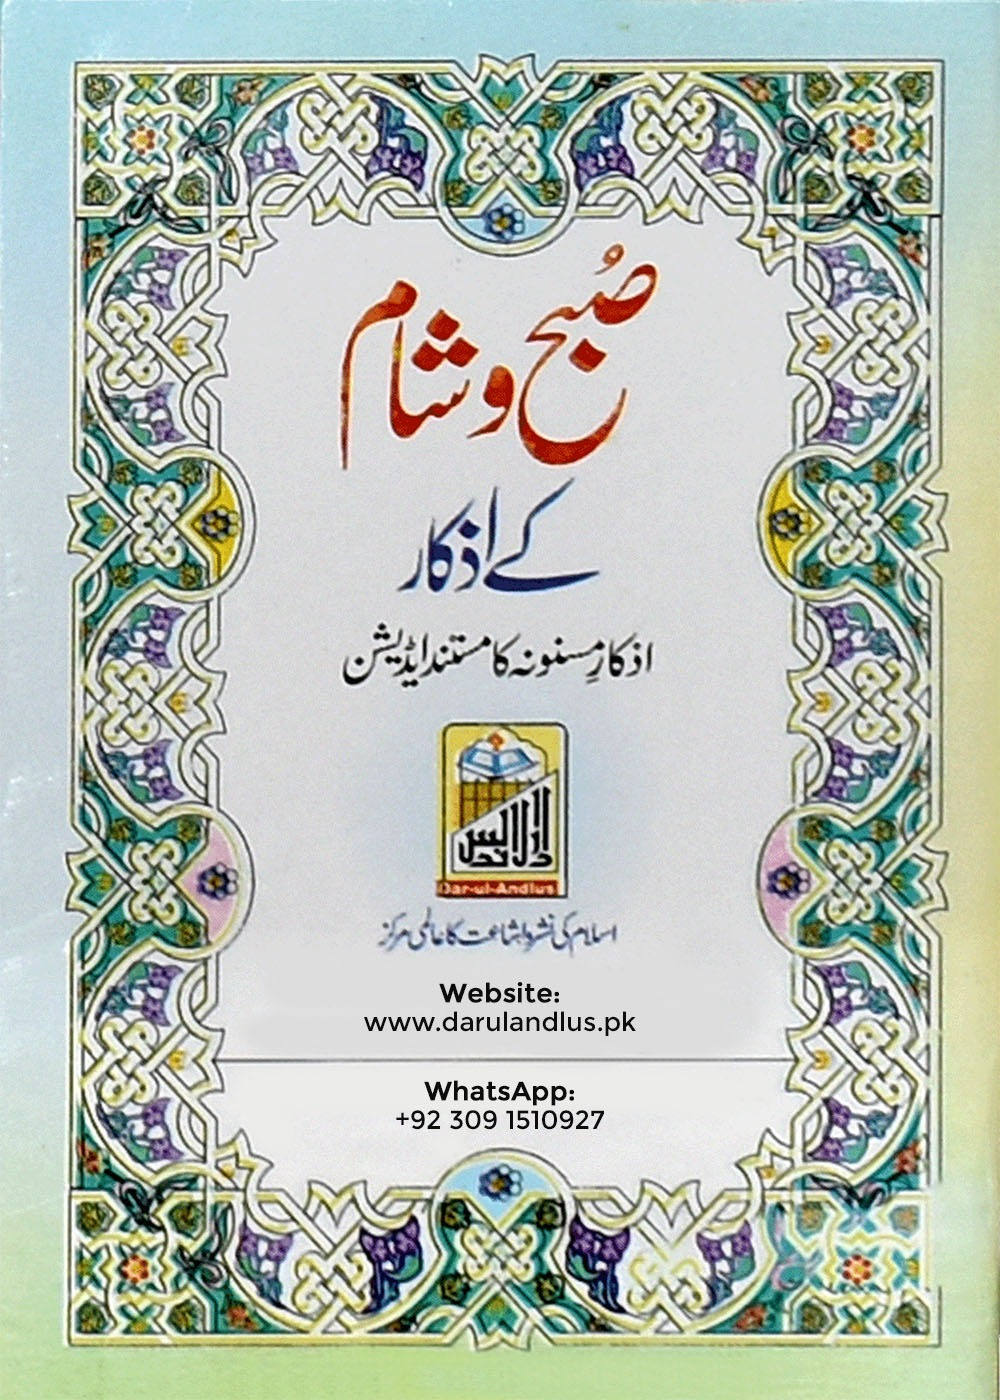 subha-sham-k-azkar-pdf-download-free-darussalam